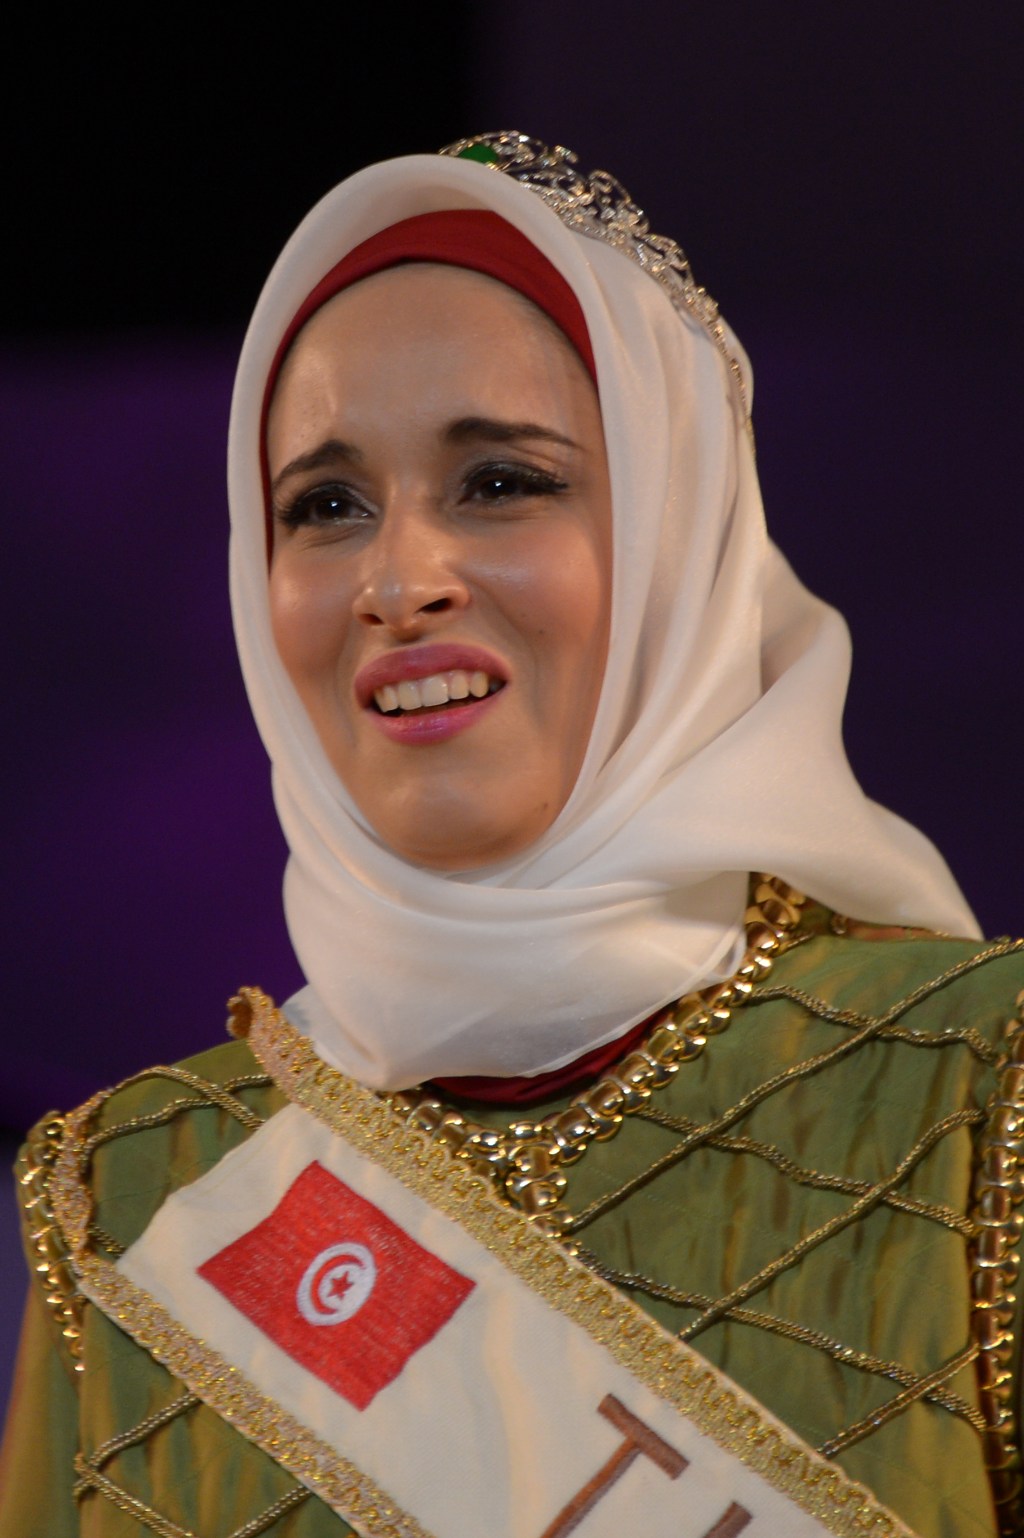 A especialista em informática tunisiana Fatma Ben Guefrache, de 25 anos, venceu o concurso Miss Mundo Muçulmana